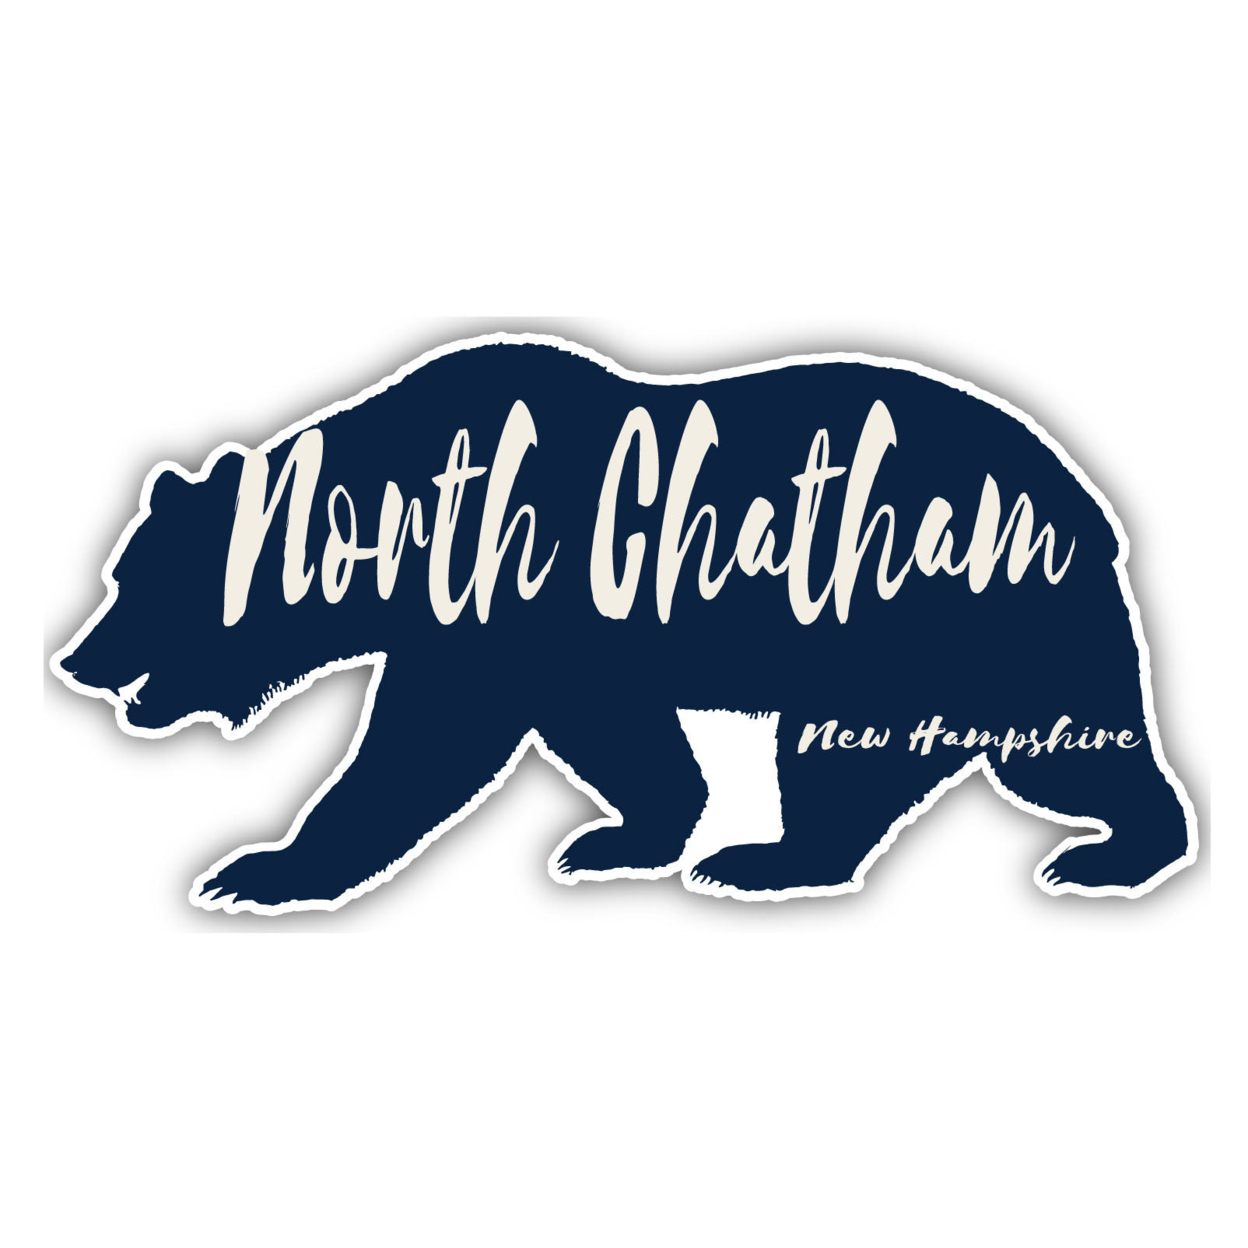 North Chatham New Hampshire Souvenir Decorative Stickers (Choose Theme And Size) - Single Unit, 2-Inch, Bear